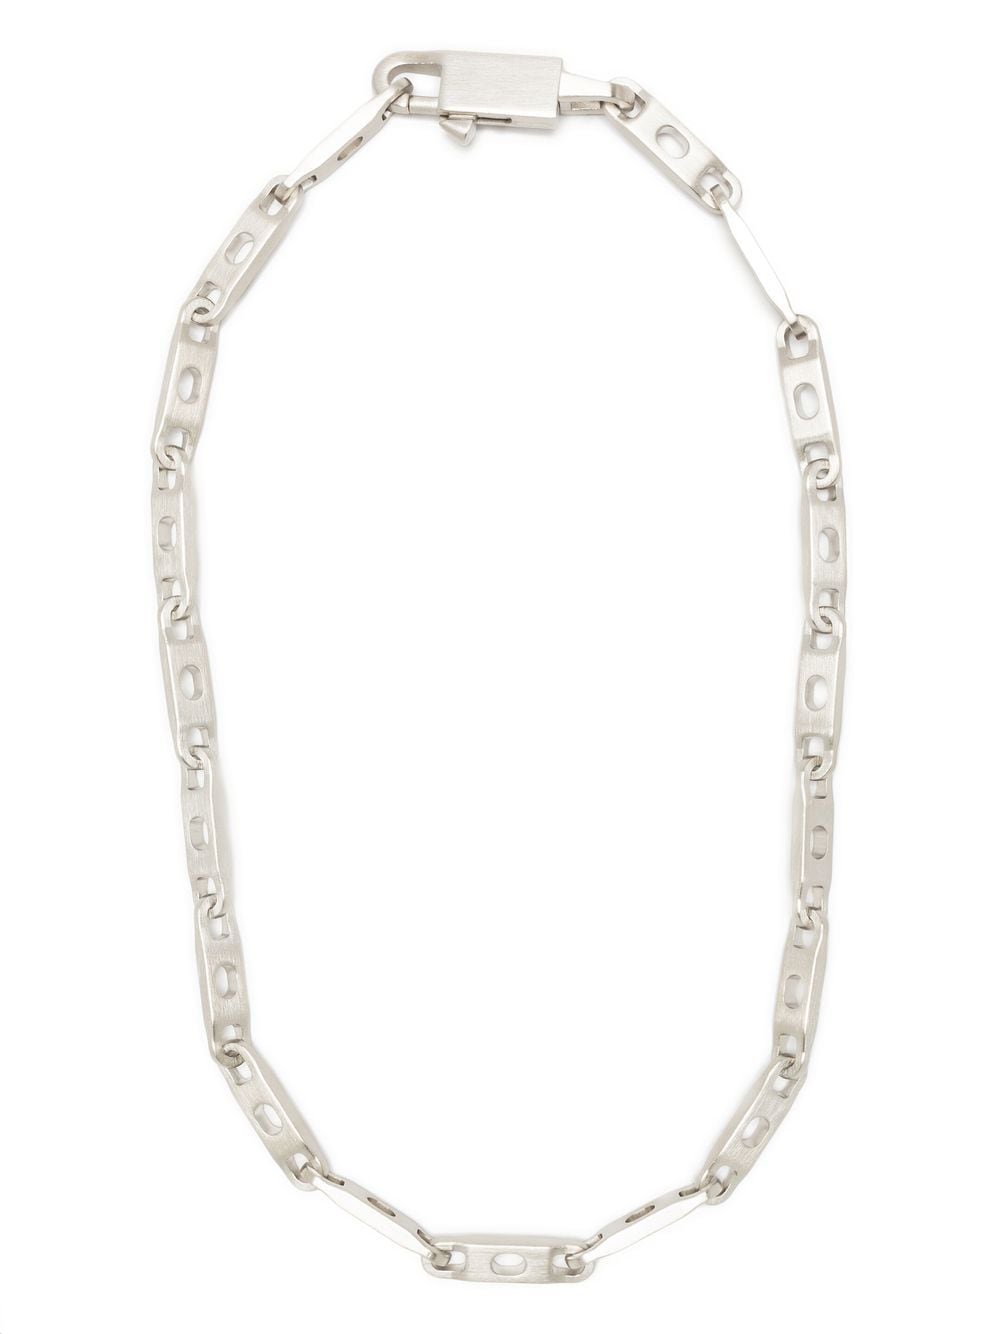 EDFU chain-link necklace